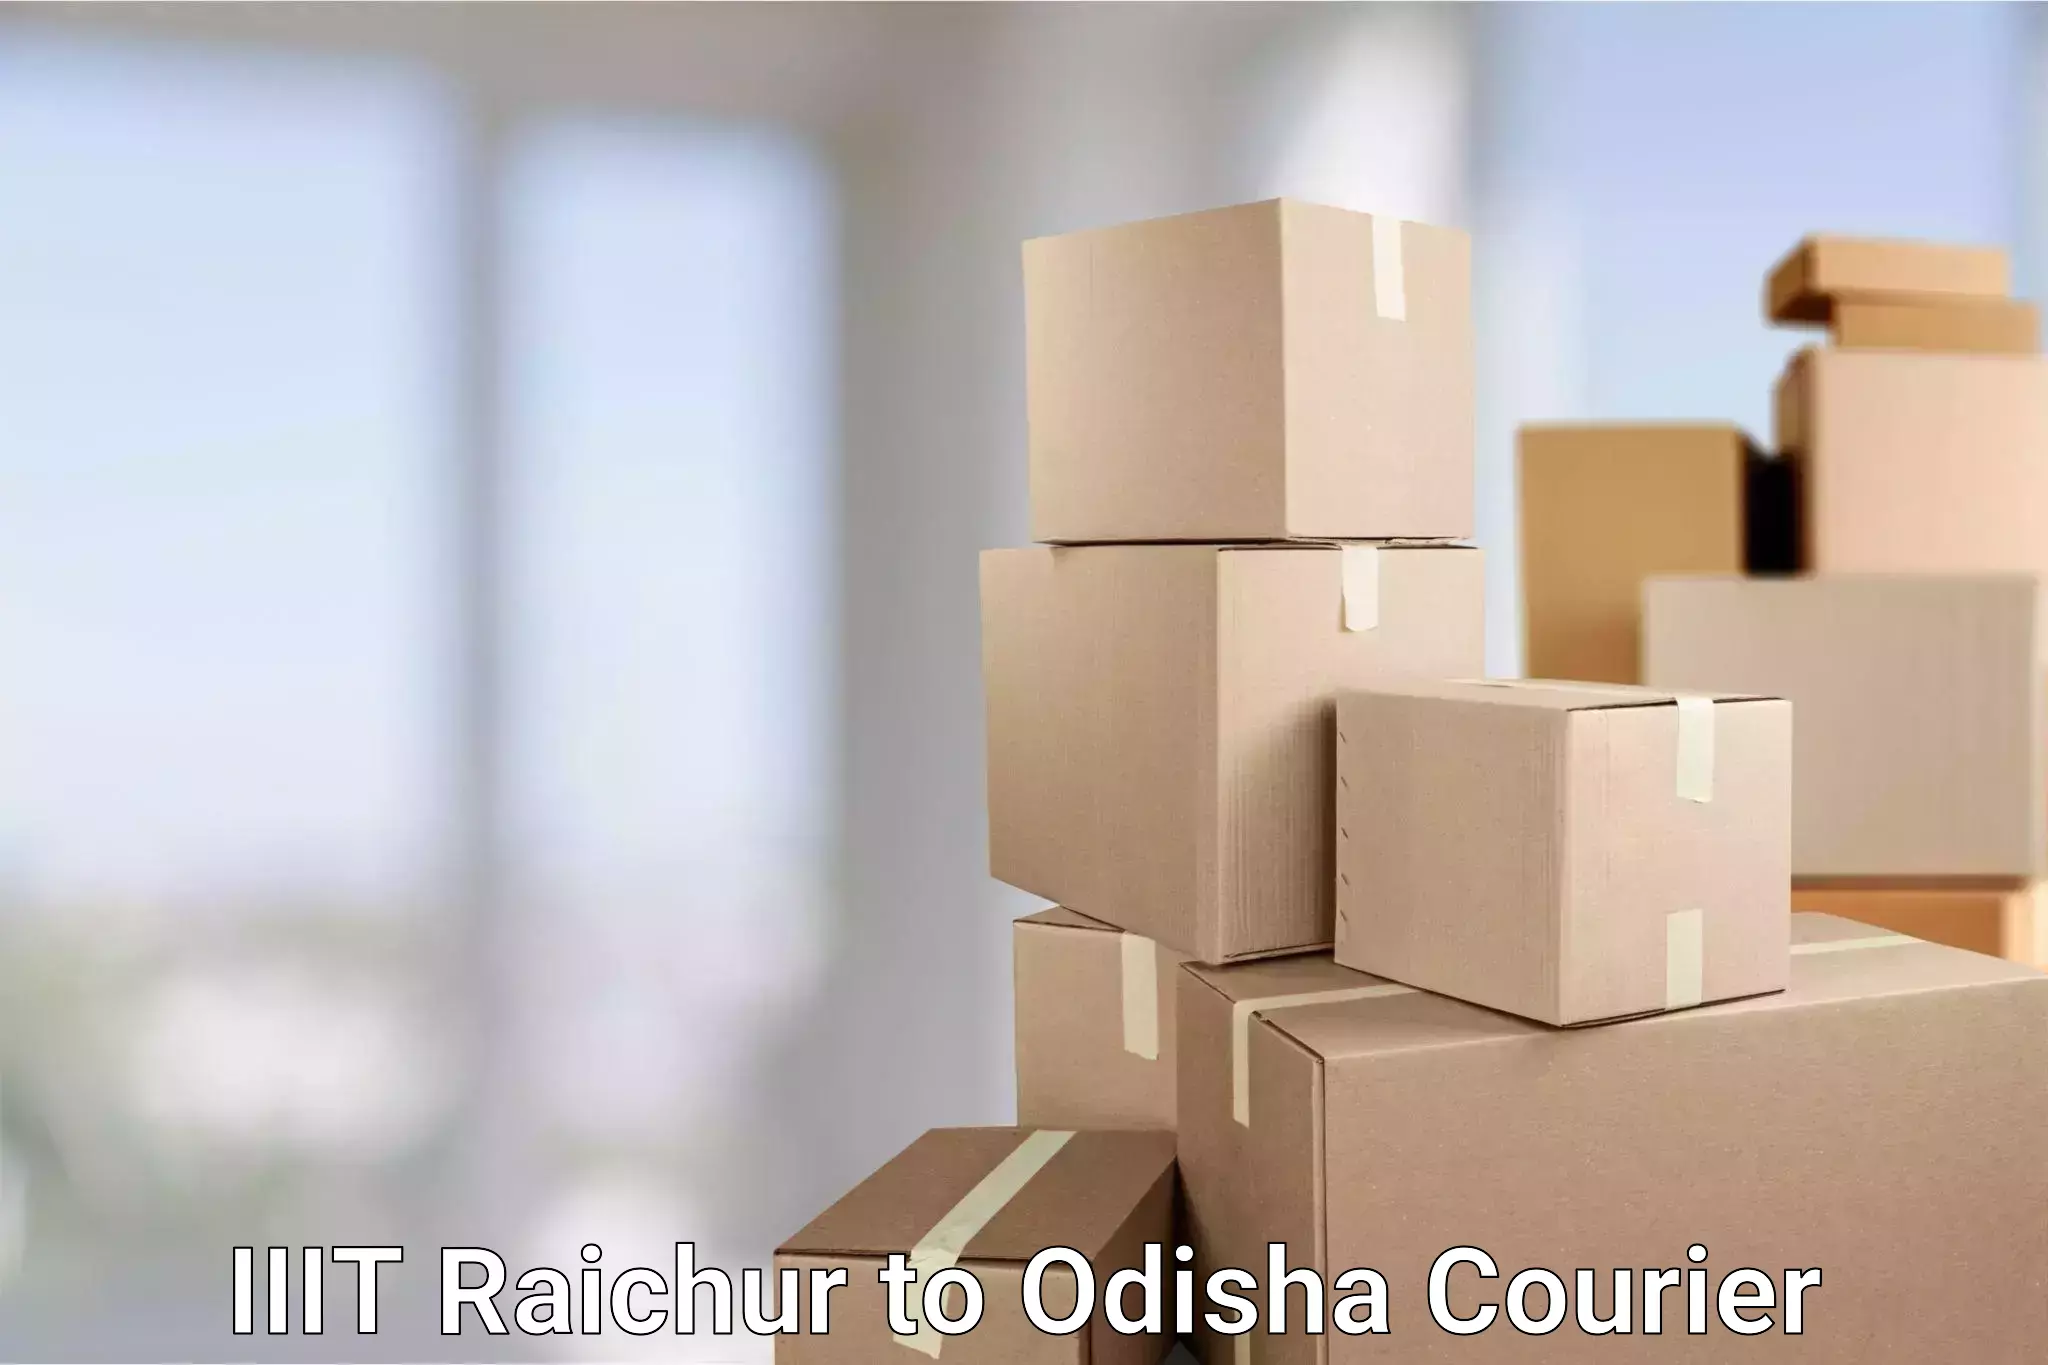 Courier service comparison IIIT Raichur to Odisha